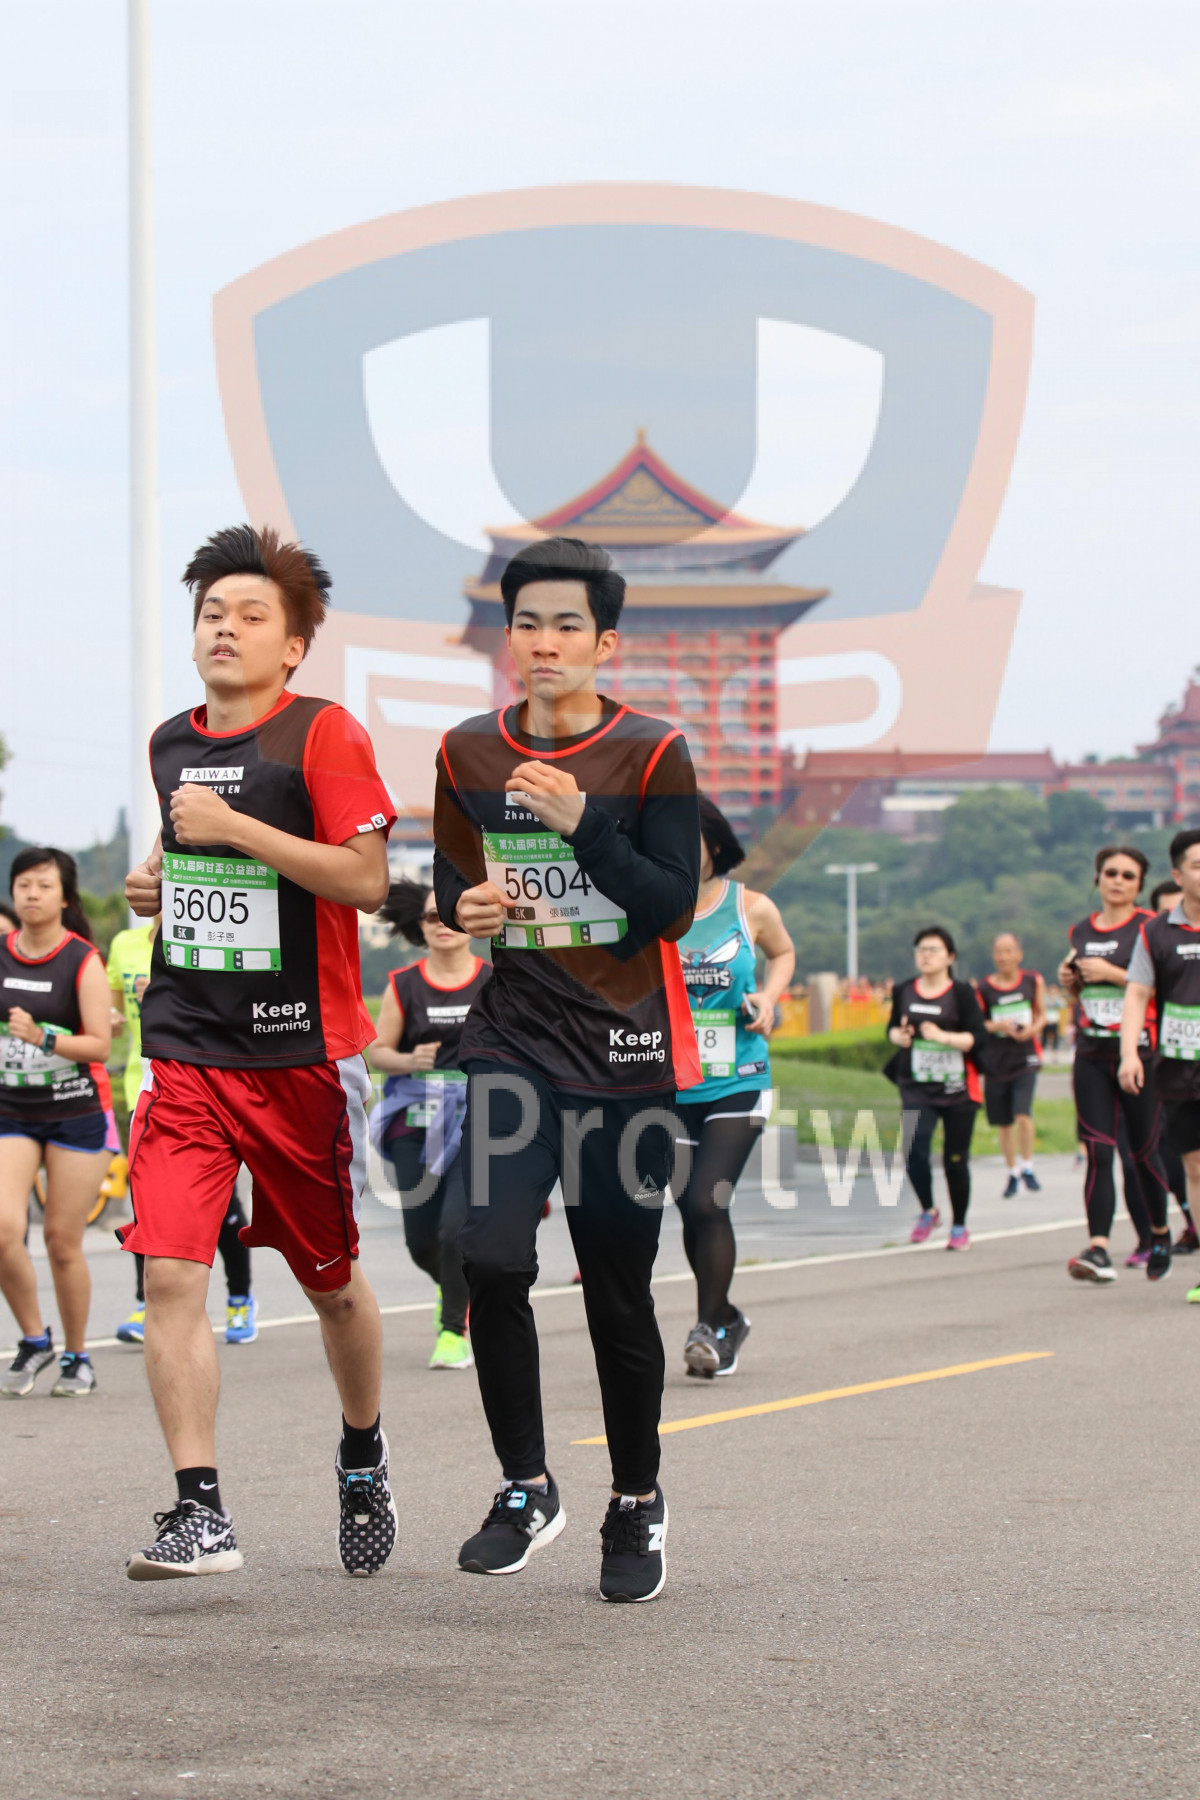 EN,Zhanb,,,560,5605,,Keep,Running,8|2018 第九屆阿甘盃公益路跑|Soryu Asuka Langley